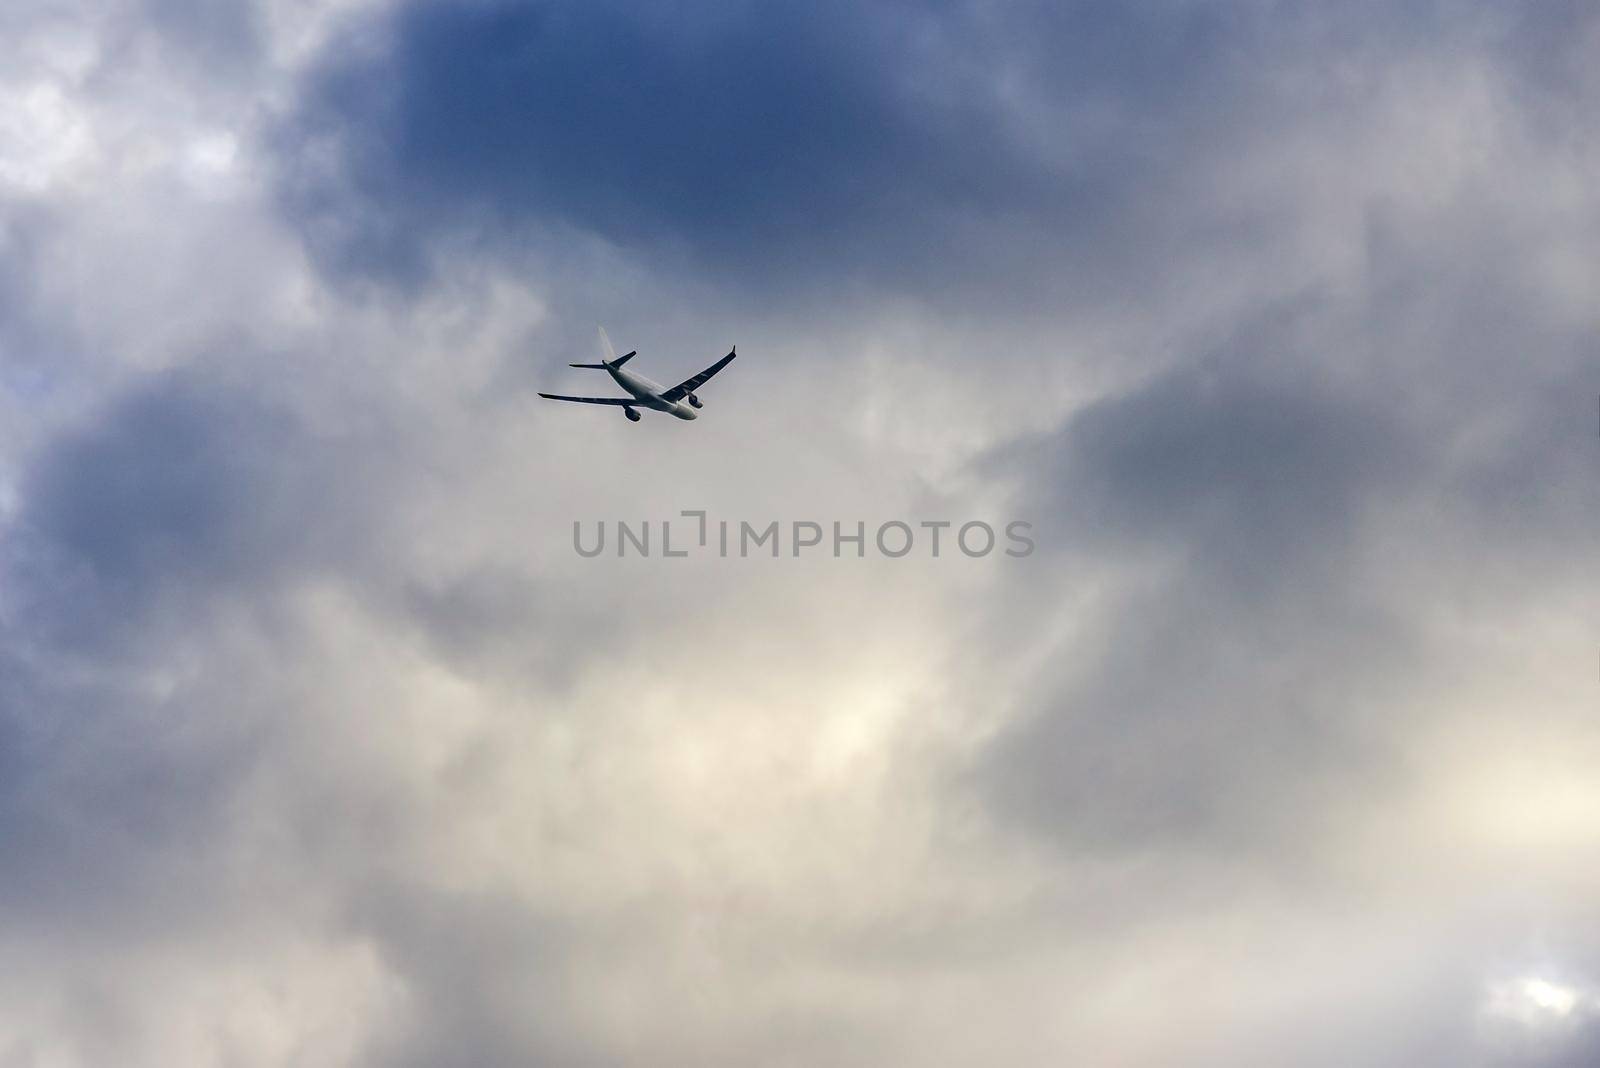 A passenger plane flies towards the thunderclouds.